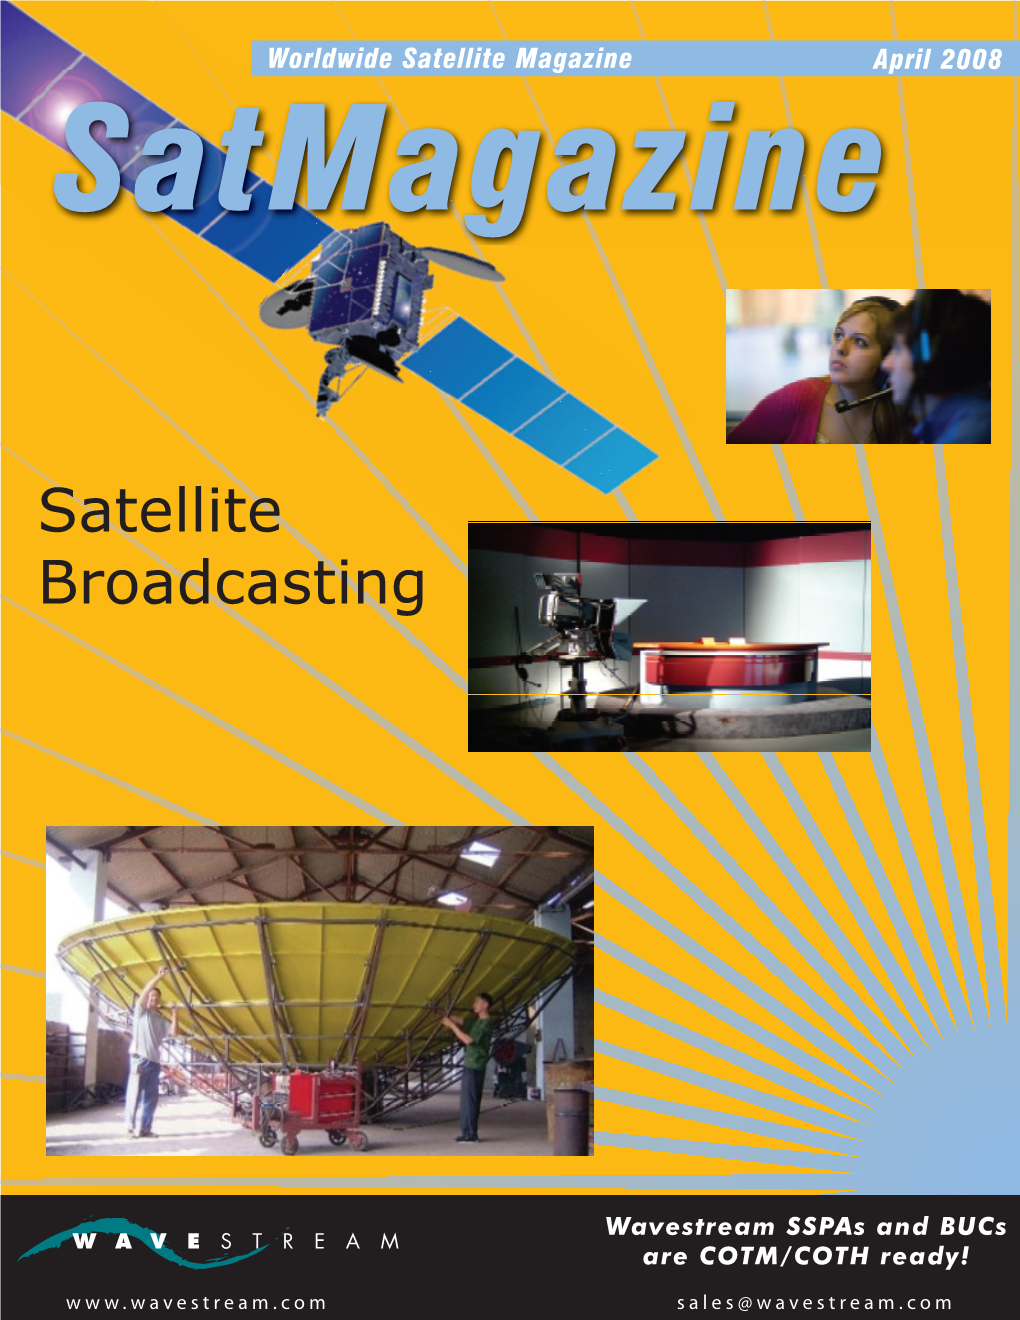 Satellite Broadcasting